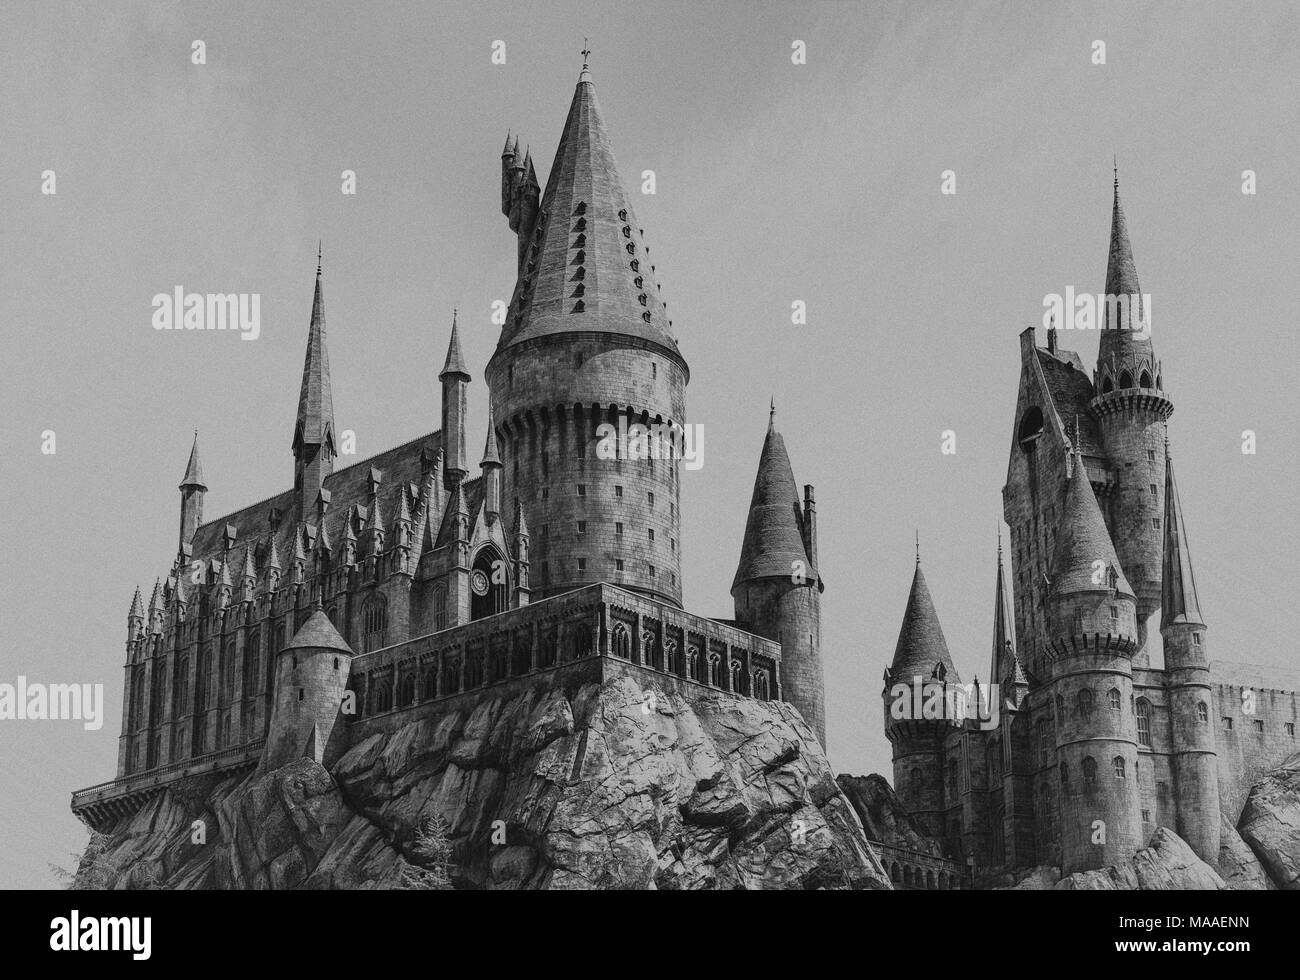 Los Angeles, Kalifornien, USA - 28. März 2018: Hogwarts Schloss, der Zauberer Welt von Harry Potter in den Universal Studios Hollywood in Los Angeles, CA Stockfoto